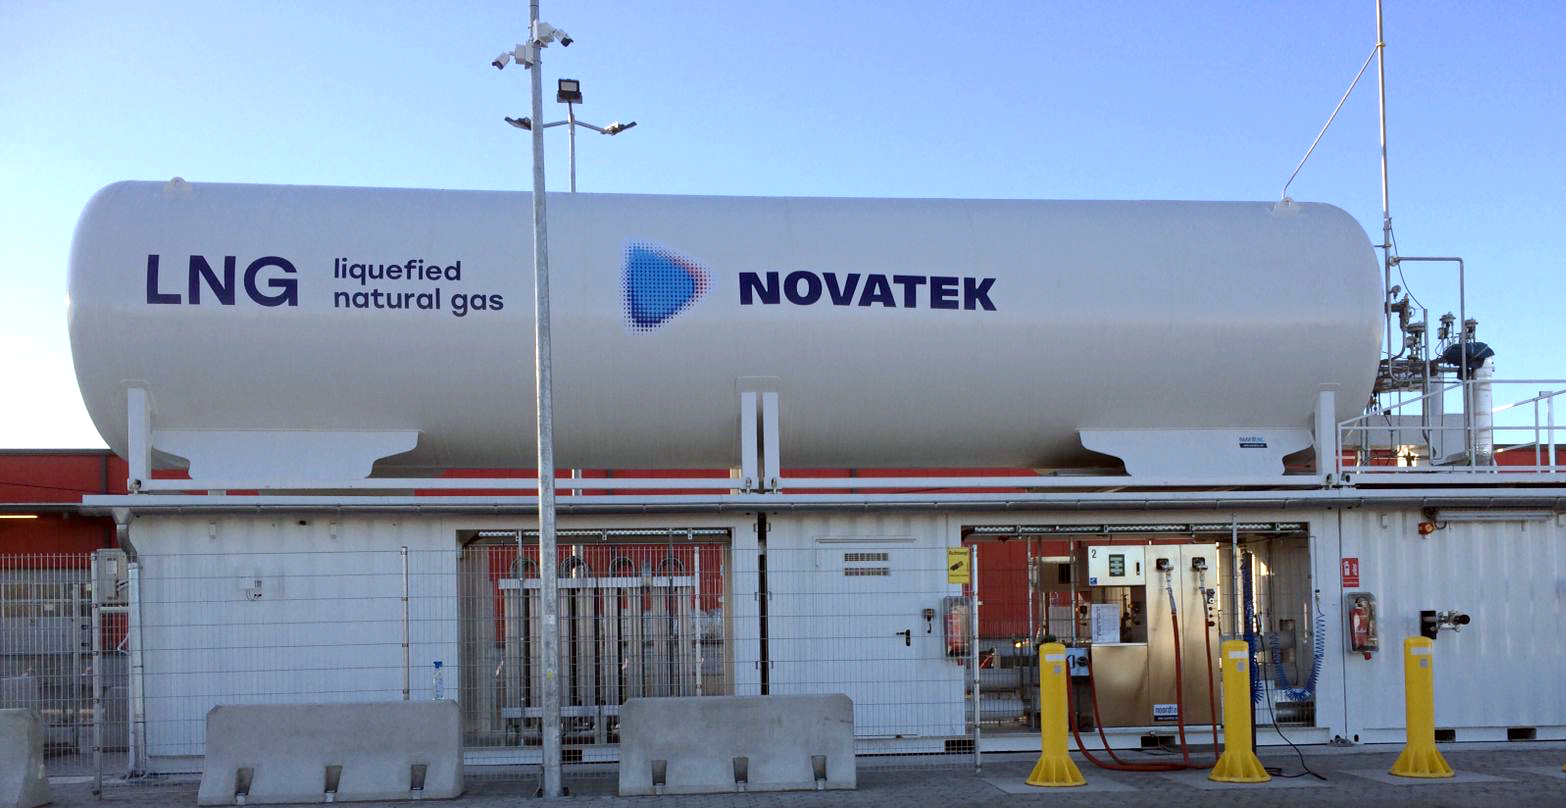 Novatek Green Energy Польша. Новатек КРИОАЗС. Польша Новатэк. Заправочная станция СПГ Новатэк.